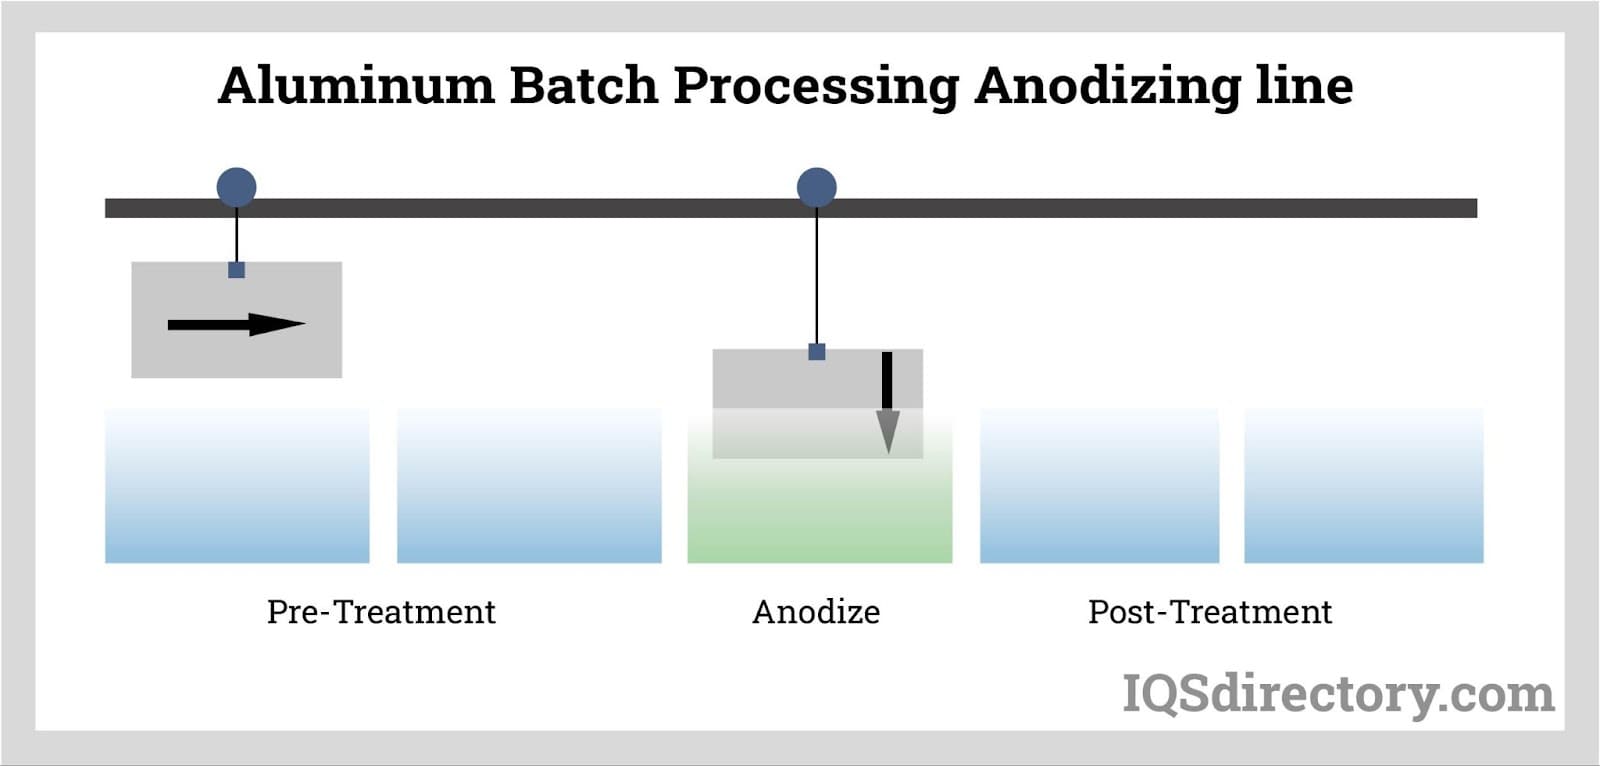 Aluminum Batch Processing Anodizing Line